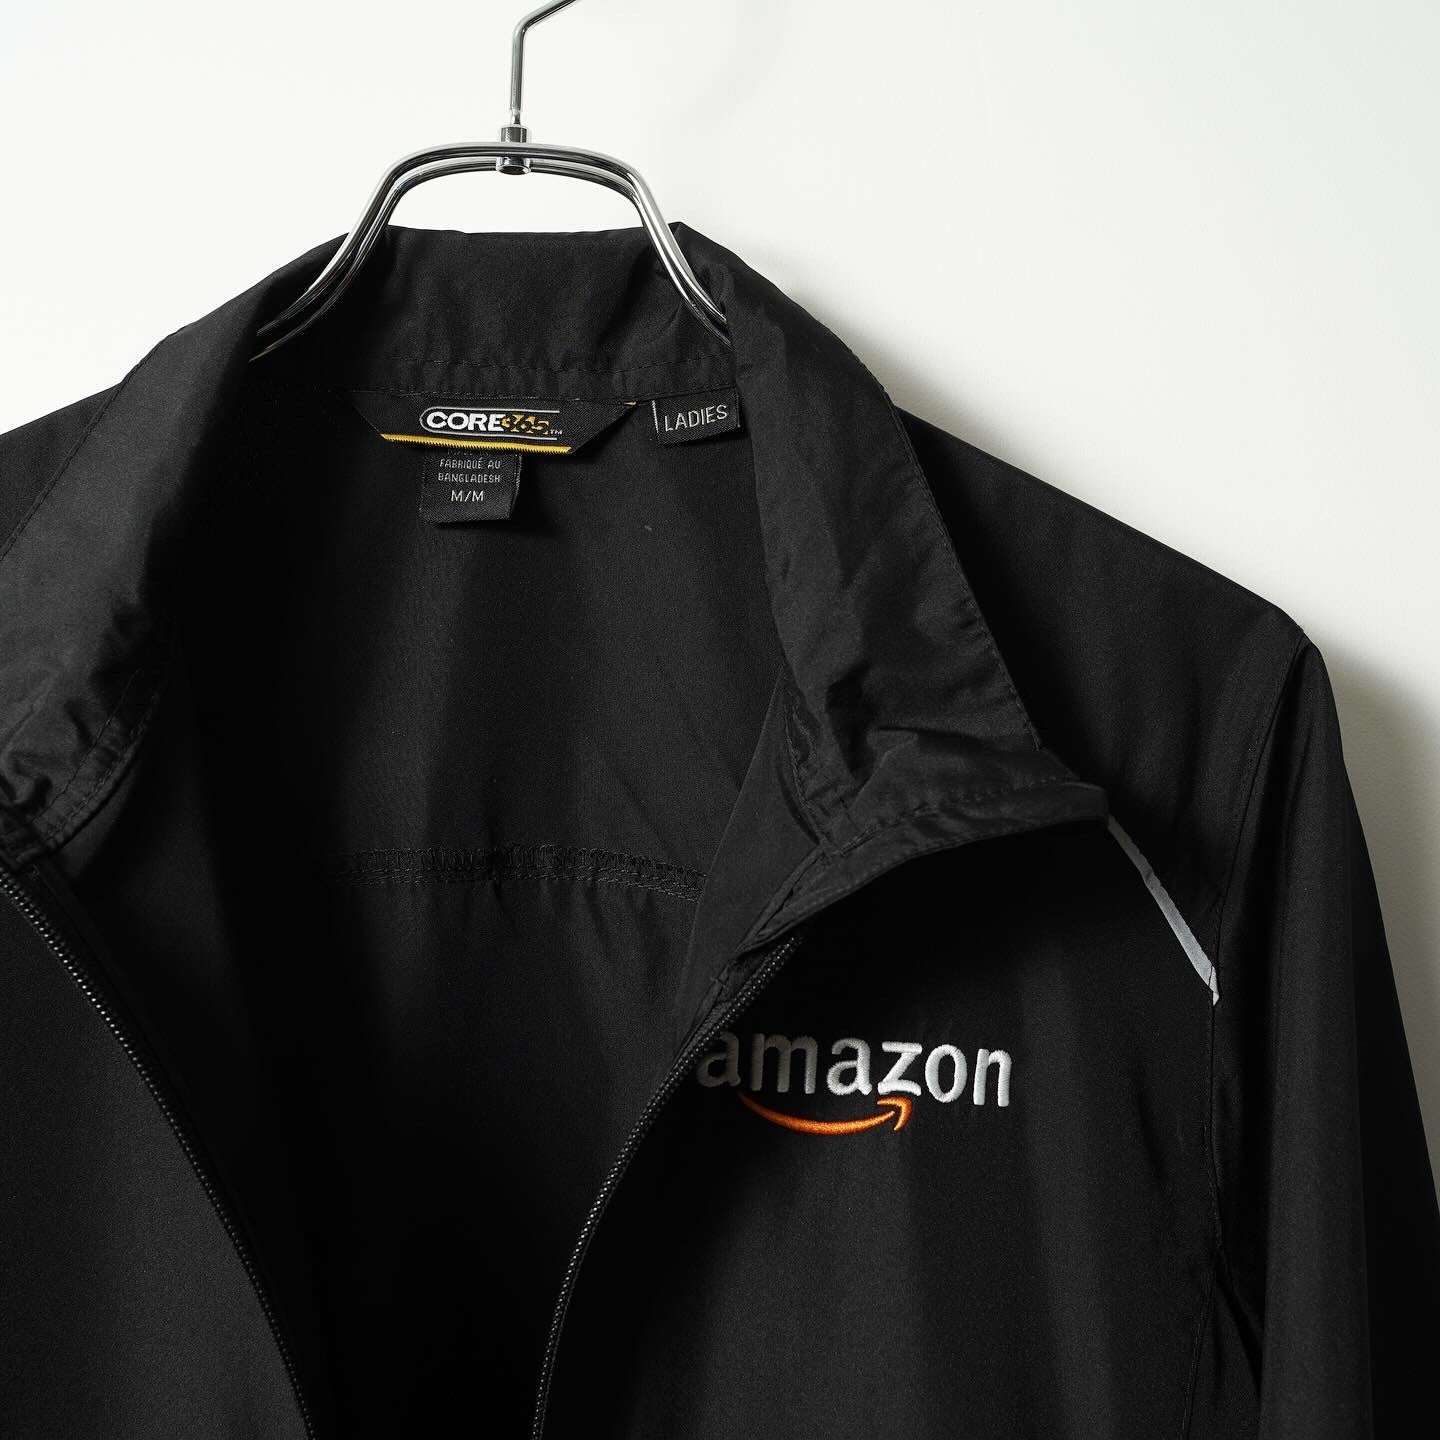 Amazon Staff Jacket